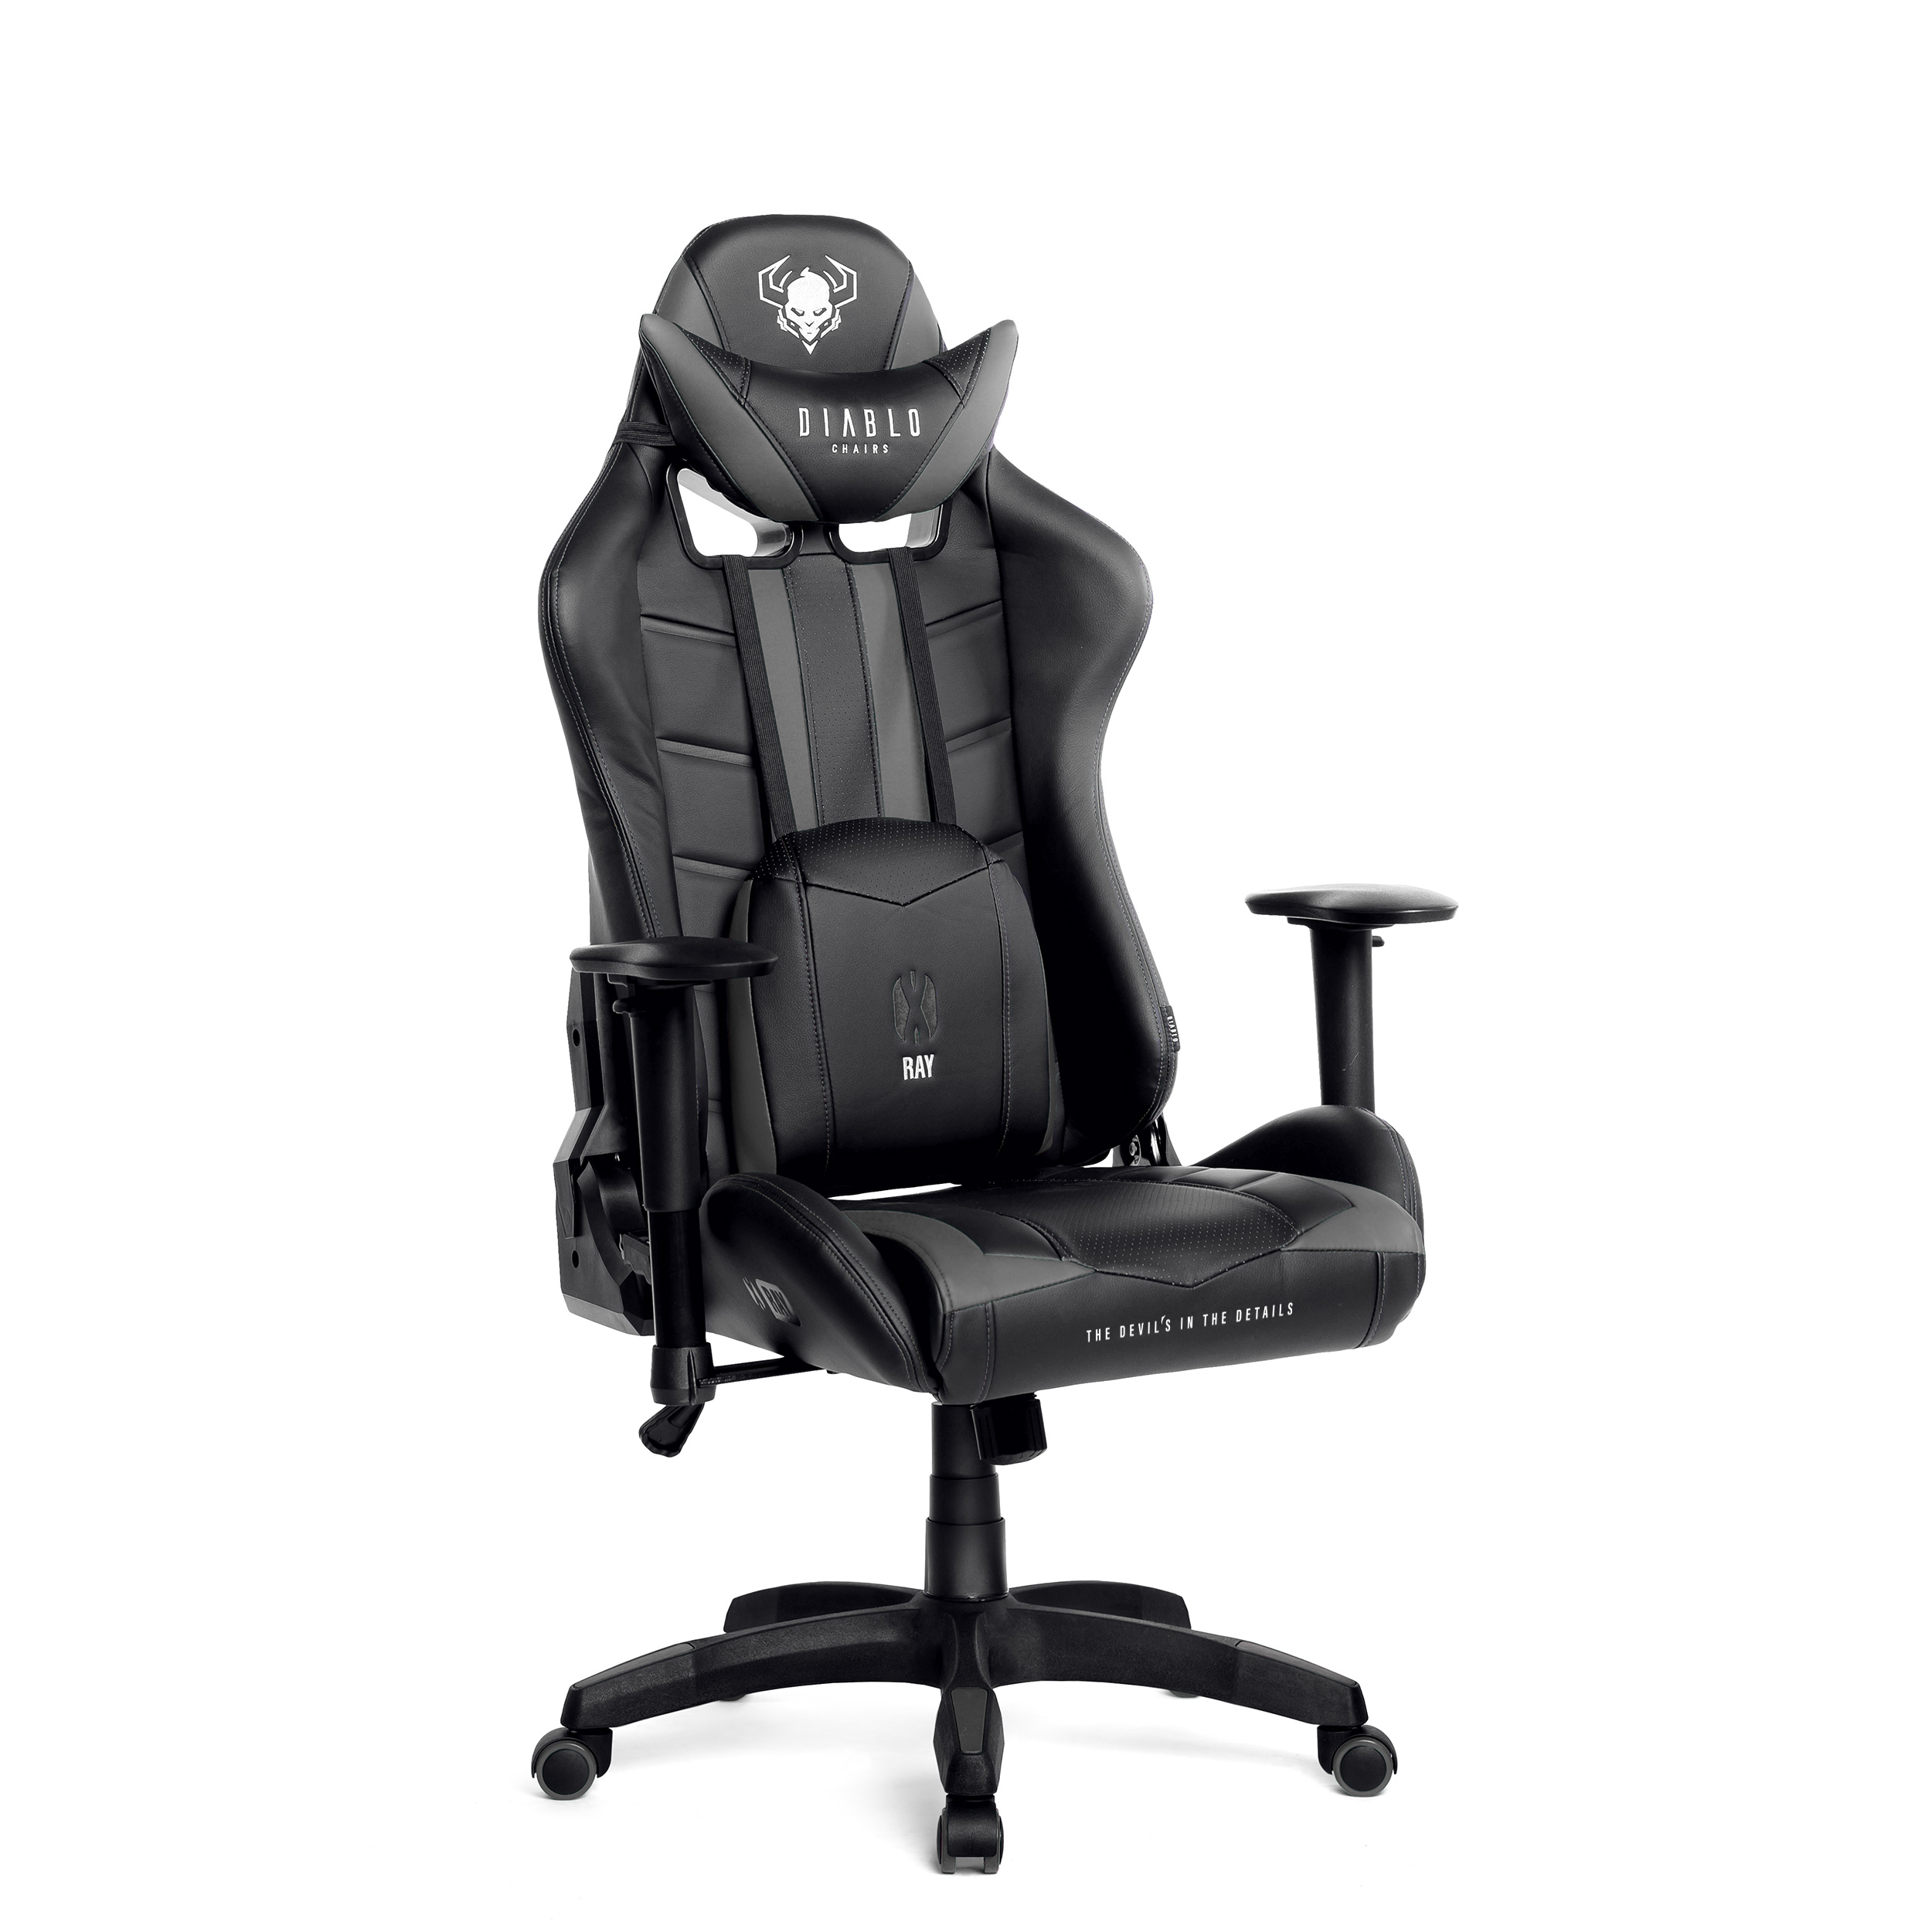 Gaming GAMING NORMAL DIABLO CHAIRS STUHL black/grey Chair, X-RAY